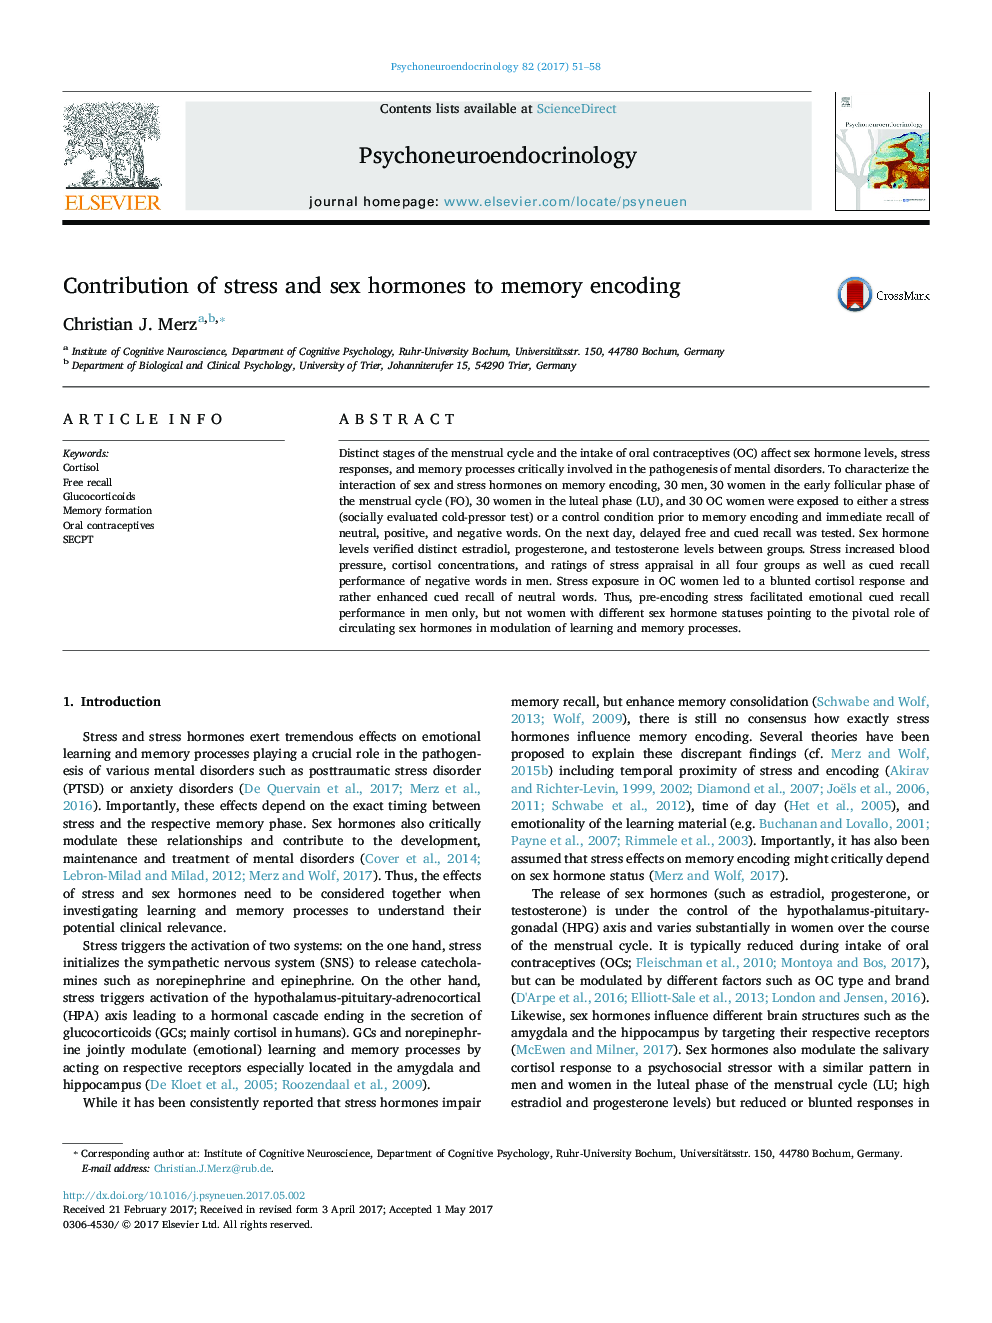 Contribution of stress and sex hormones to memory encoding